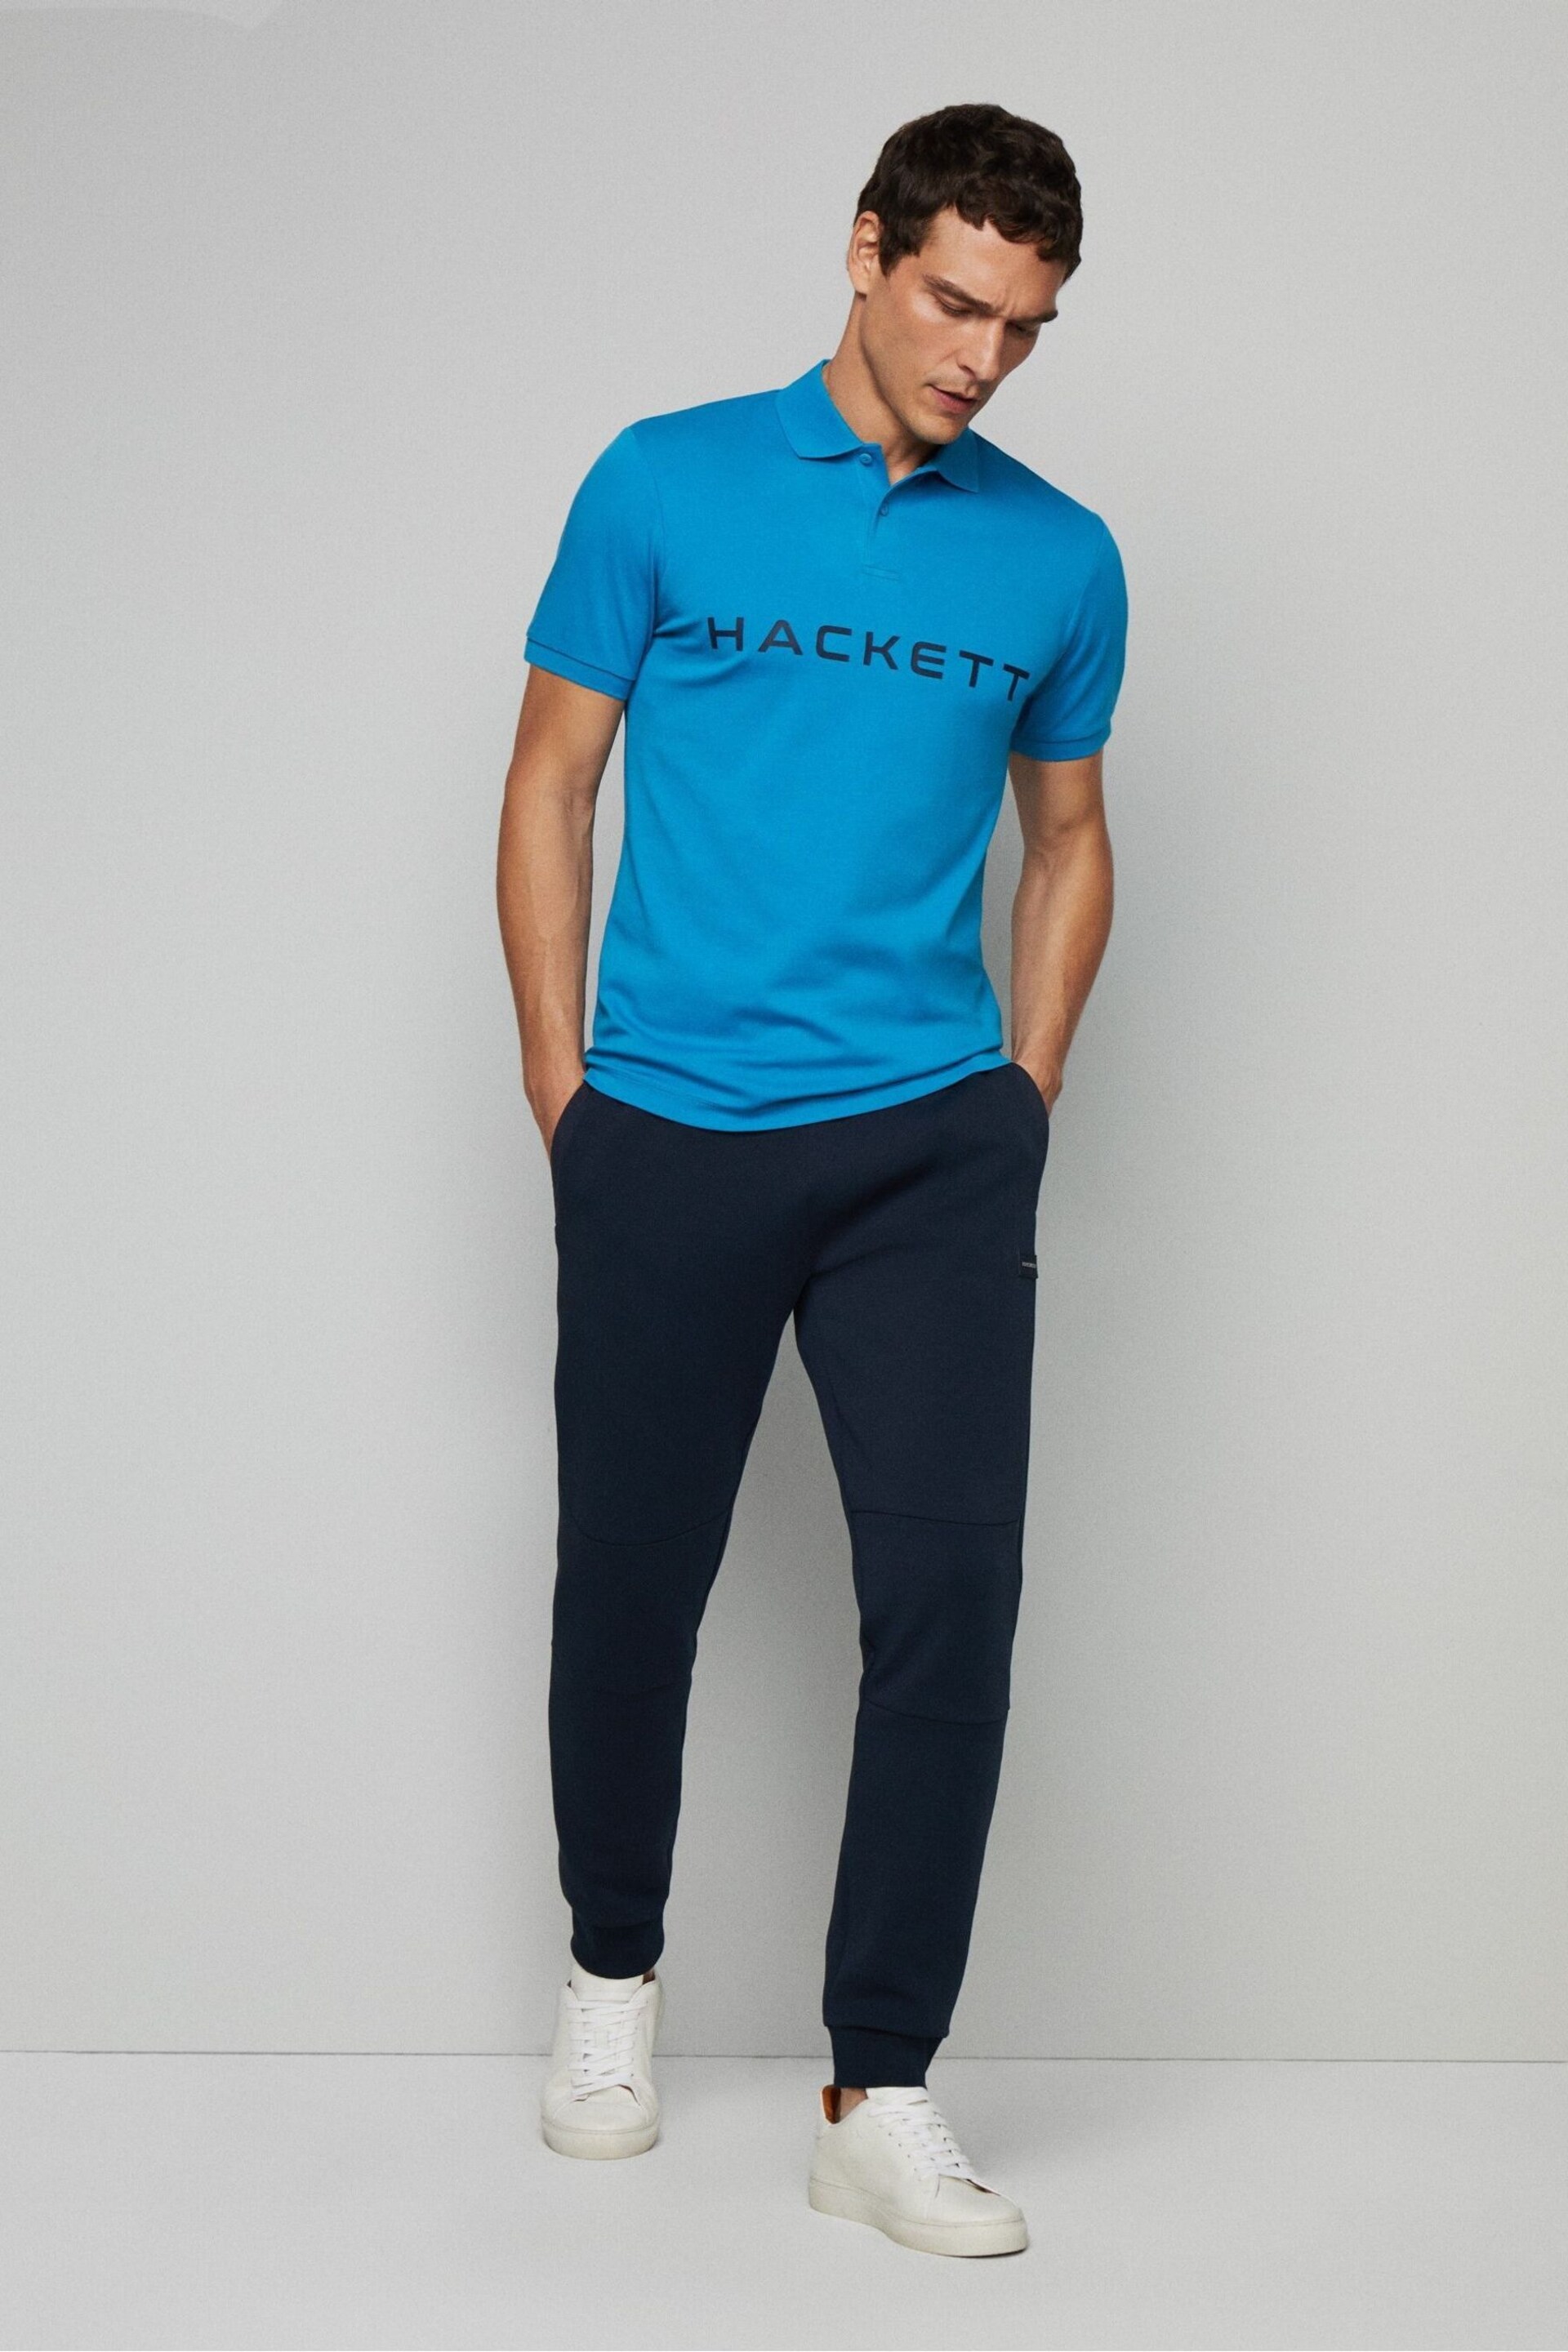 Hackett London Men Blue Short Sleeve Polo Shirt - Image 3 of 4